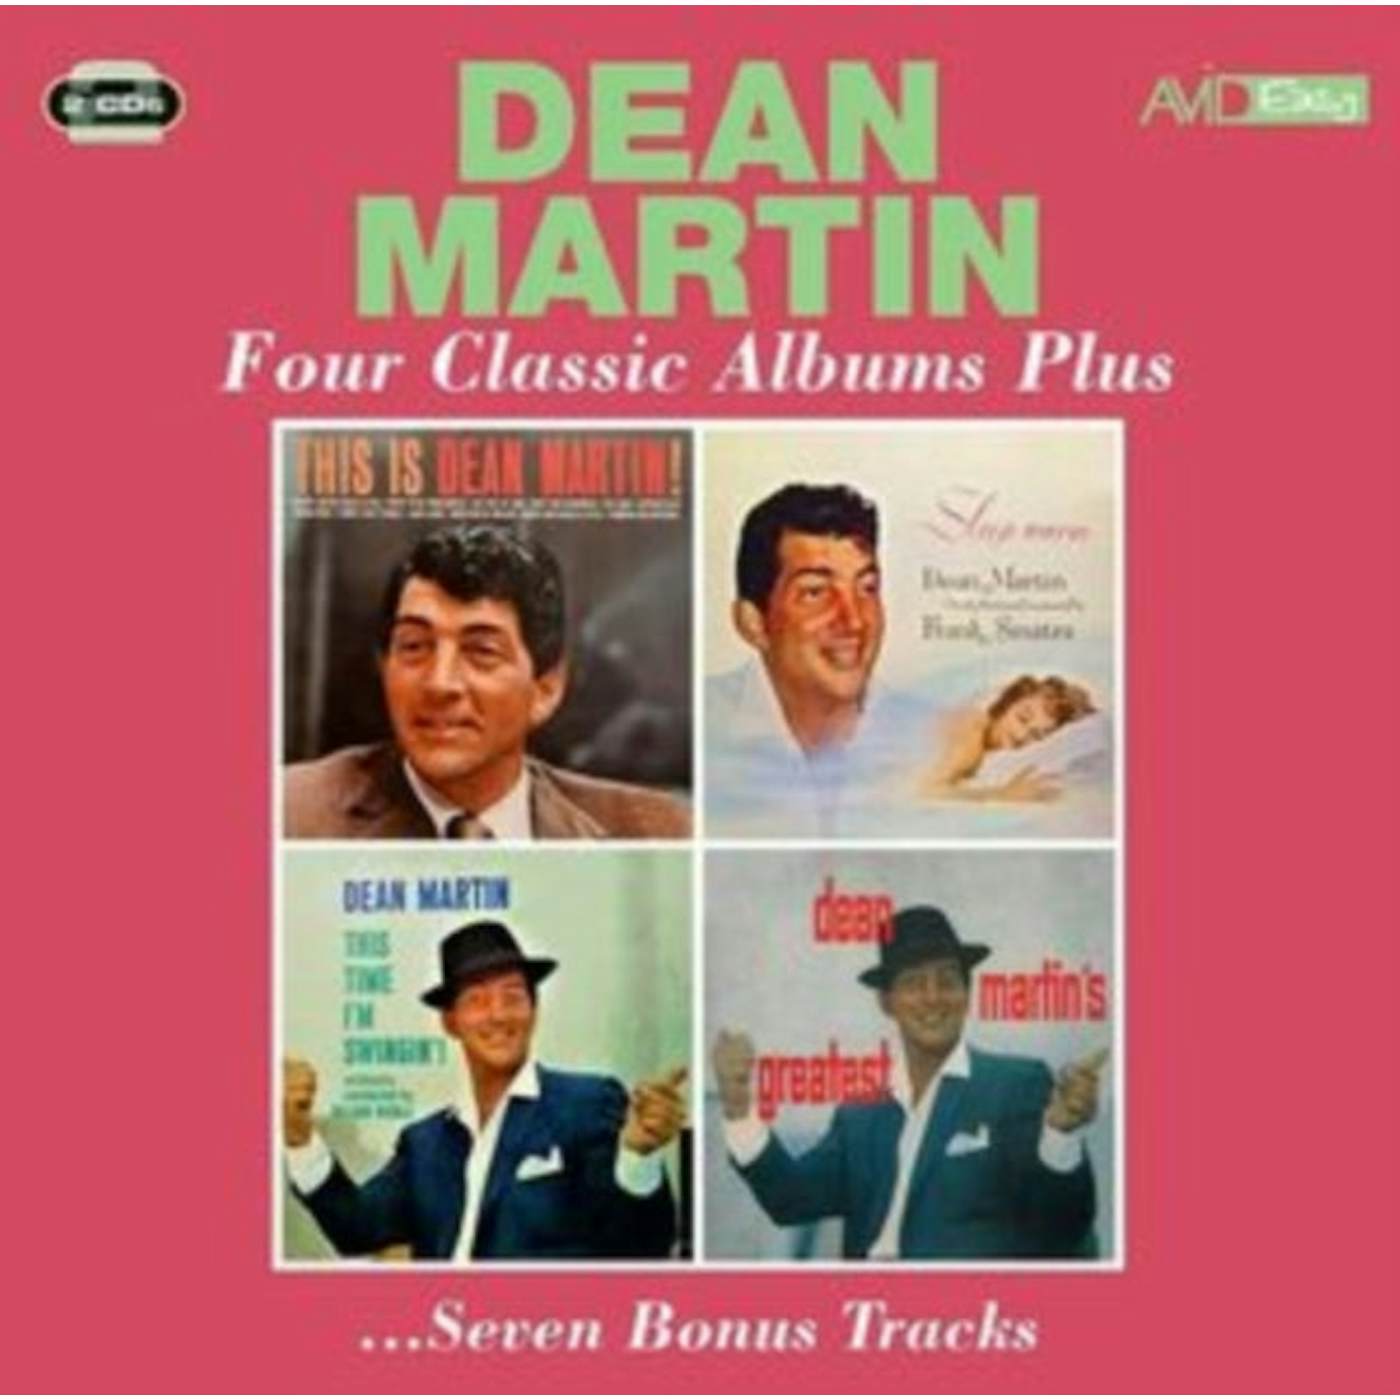 Dean Martin CD - Four Classic Albums Plus (This Is Dean Martin / Sleep Warm / This Time I'm Swingin / Dean Martin's Greatest)